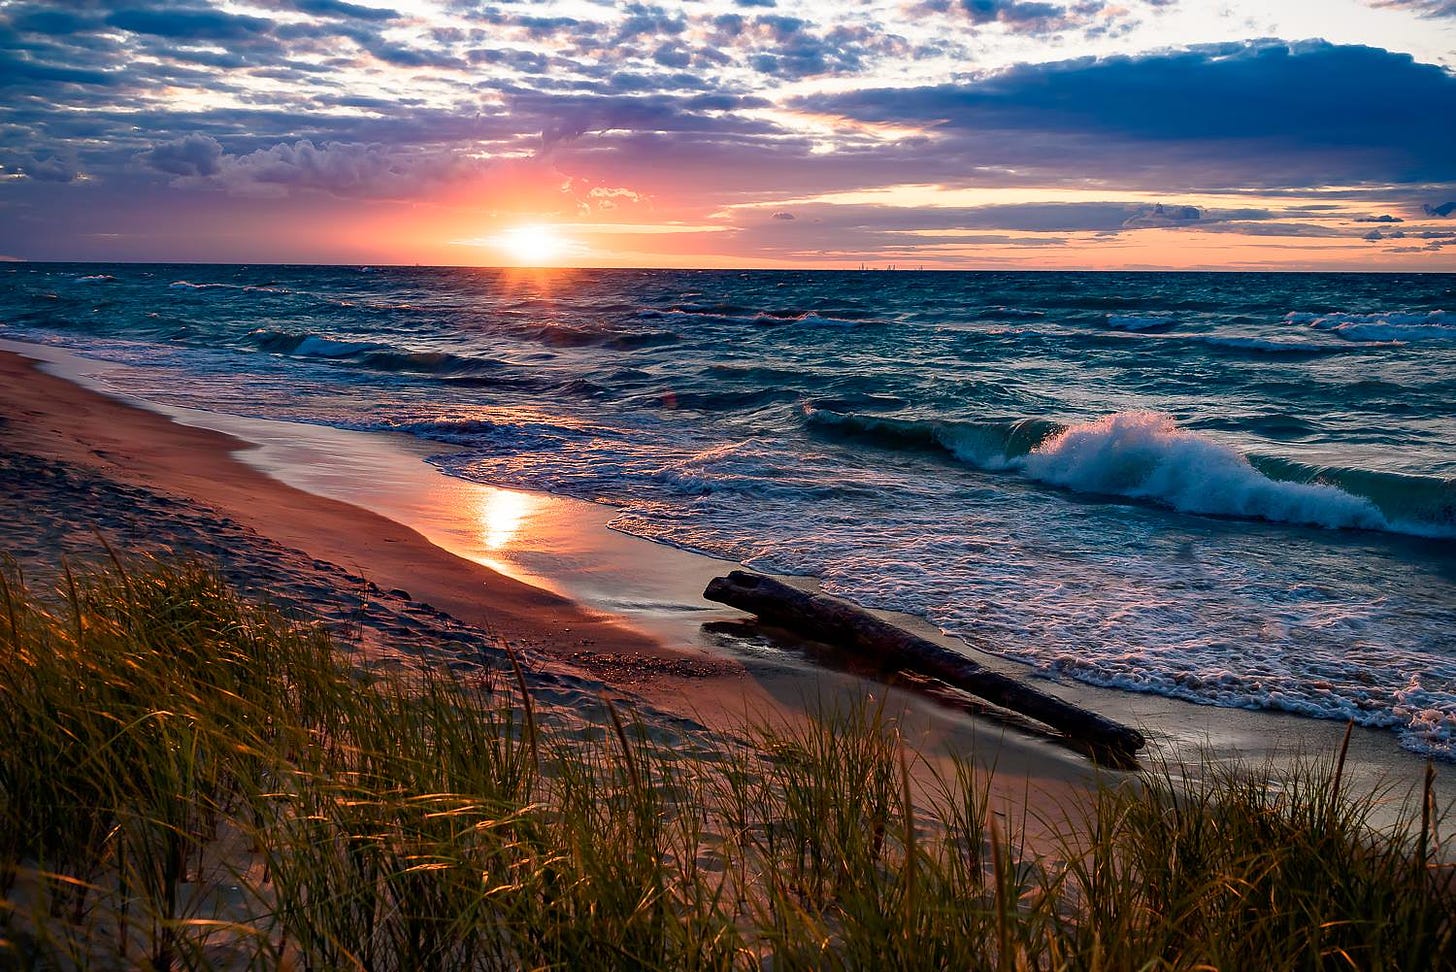 A photo of the sun setting over Lake Michigan.